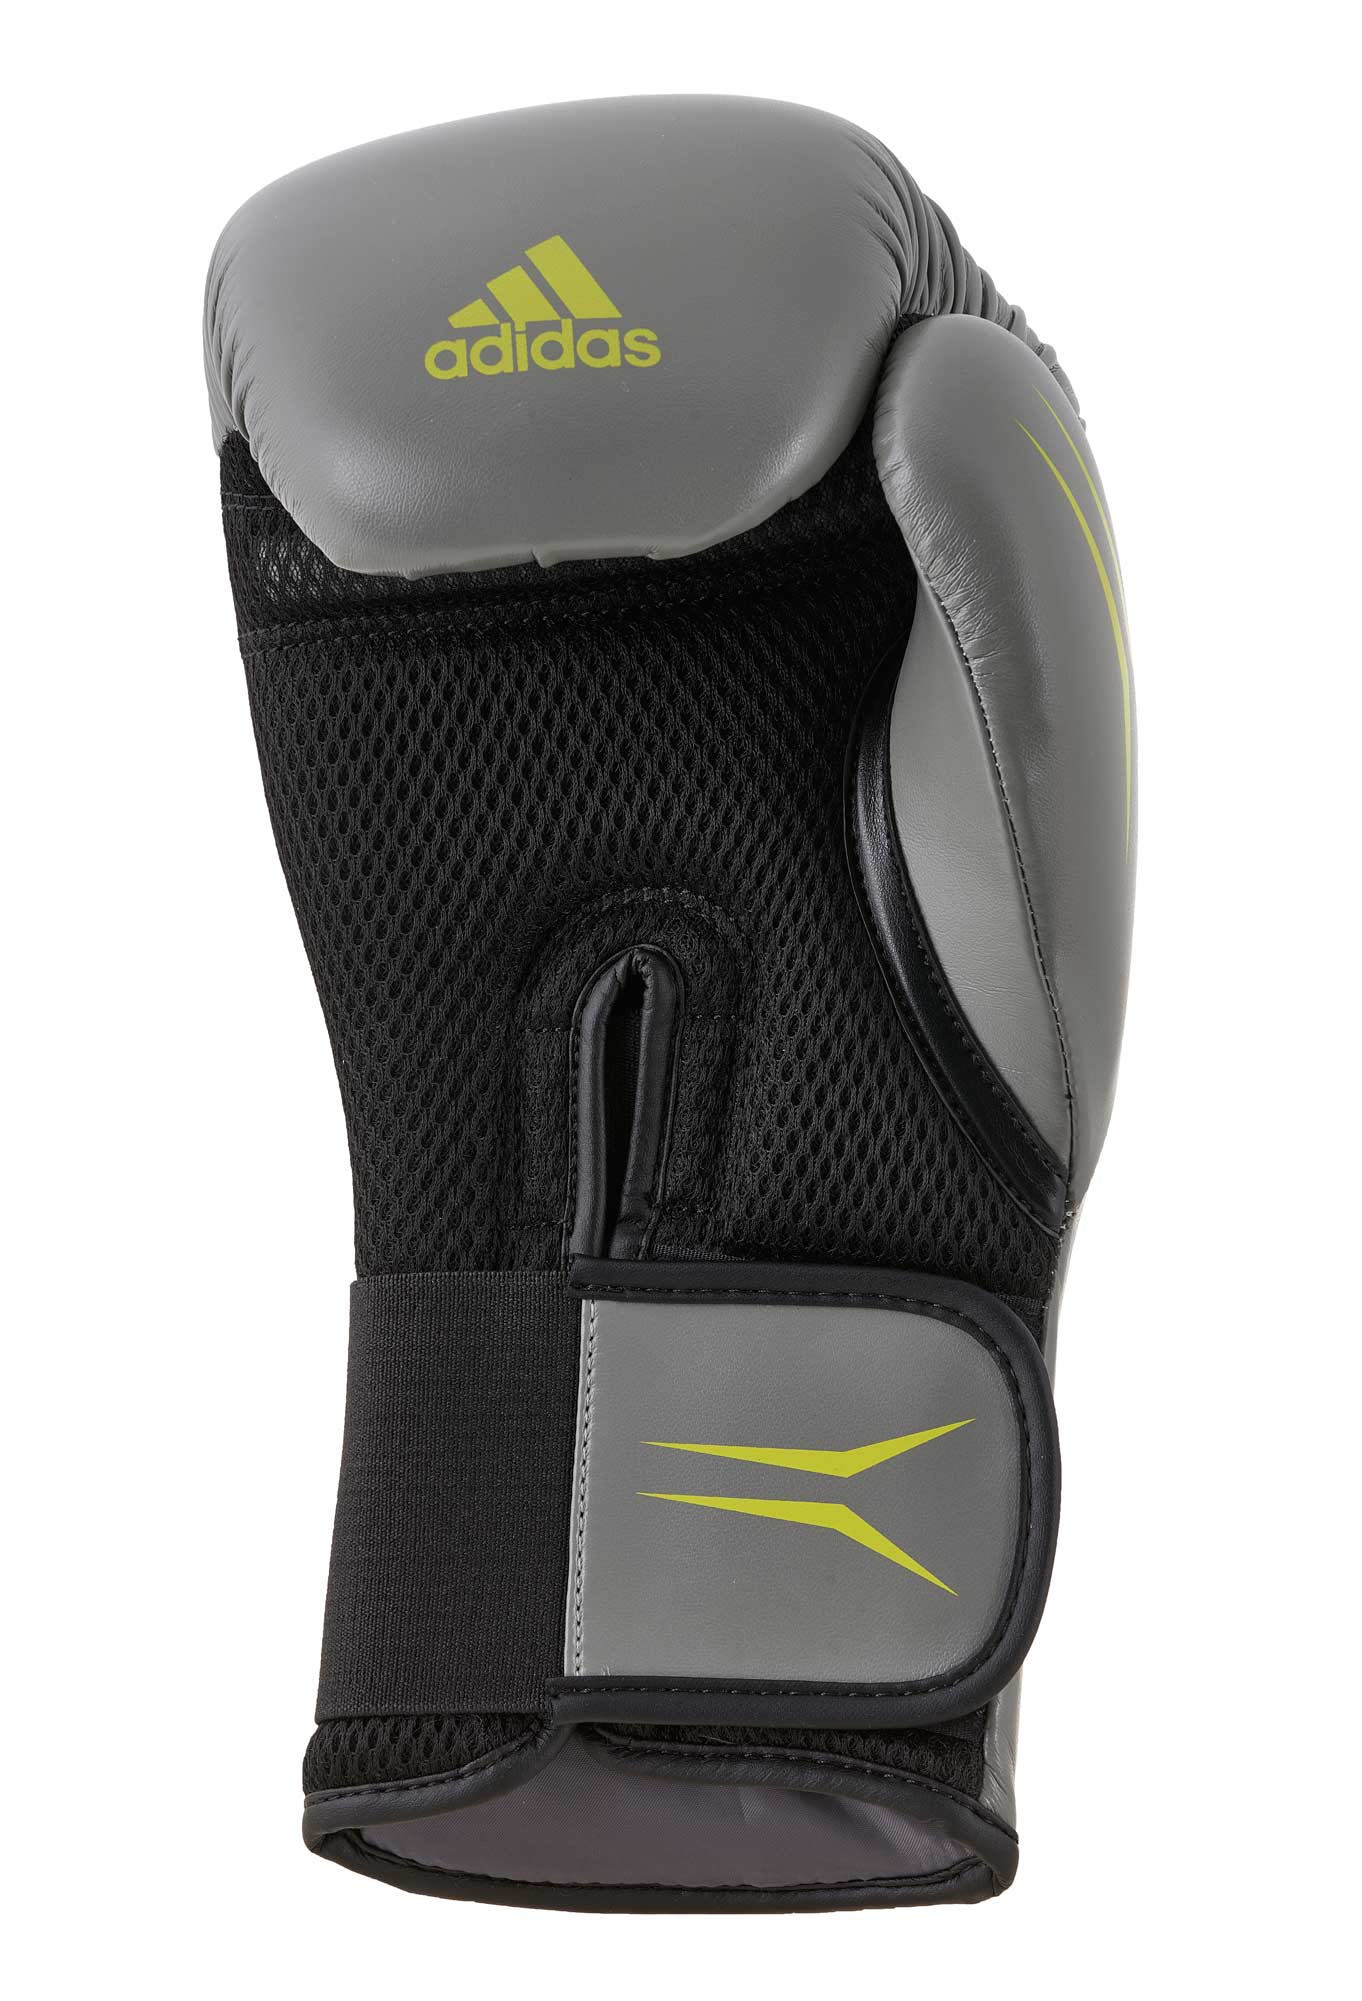 adidas boxing gloves SPEED TILT 150 SPD150TG grey/lime